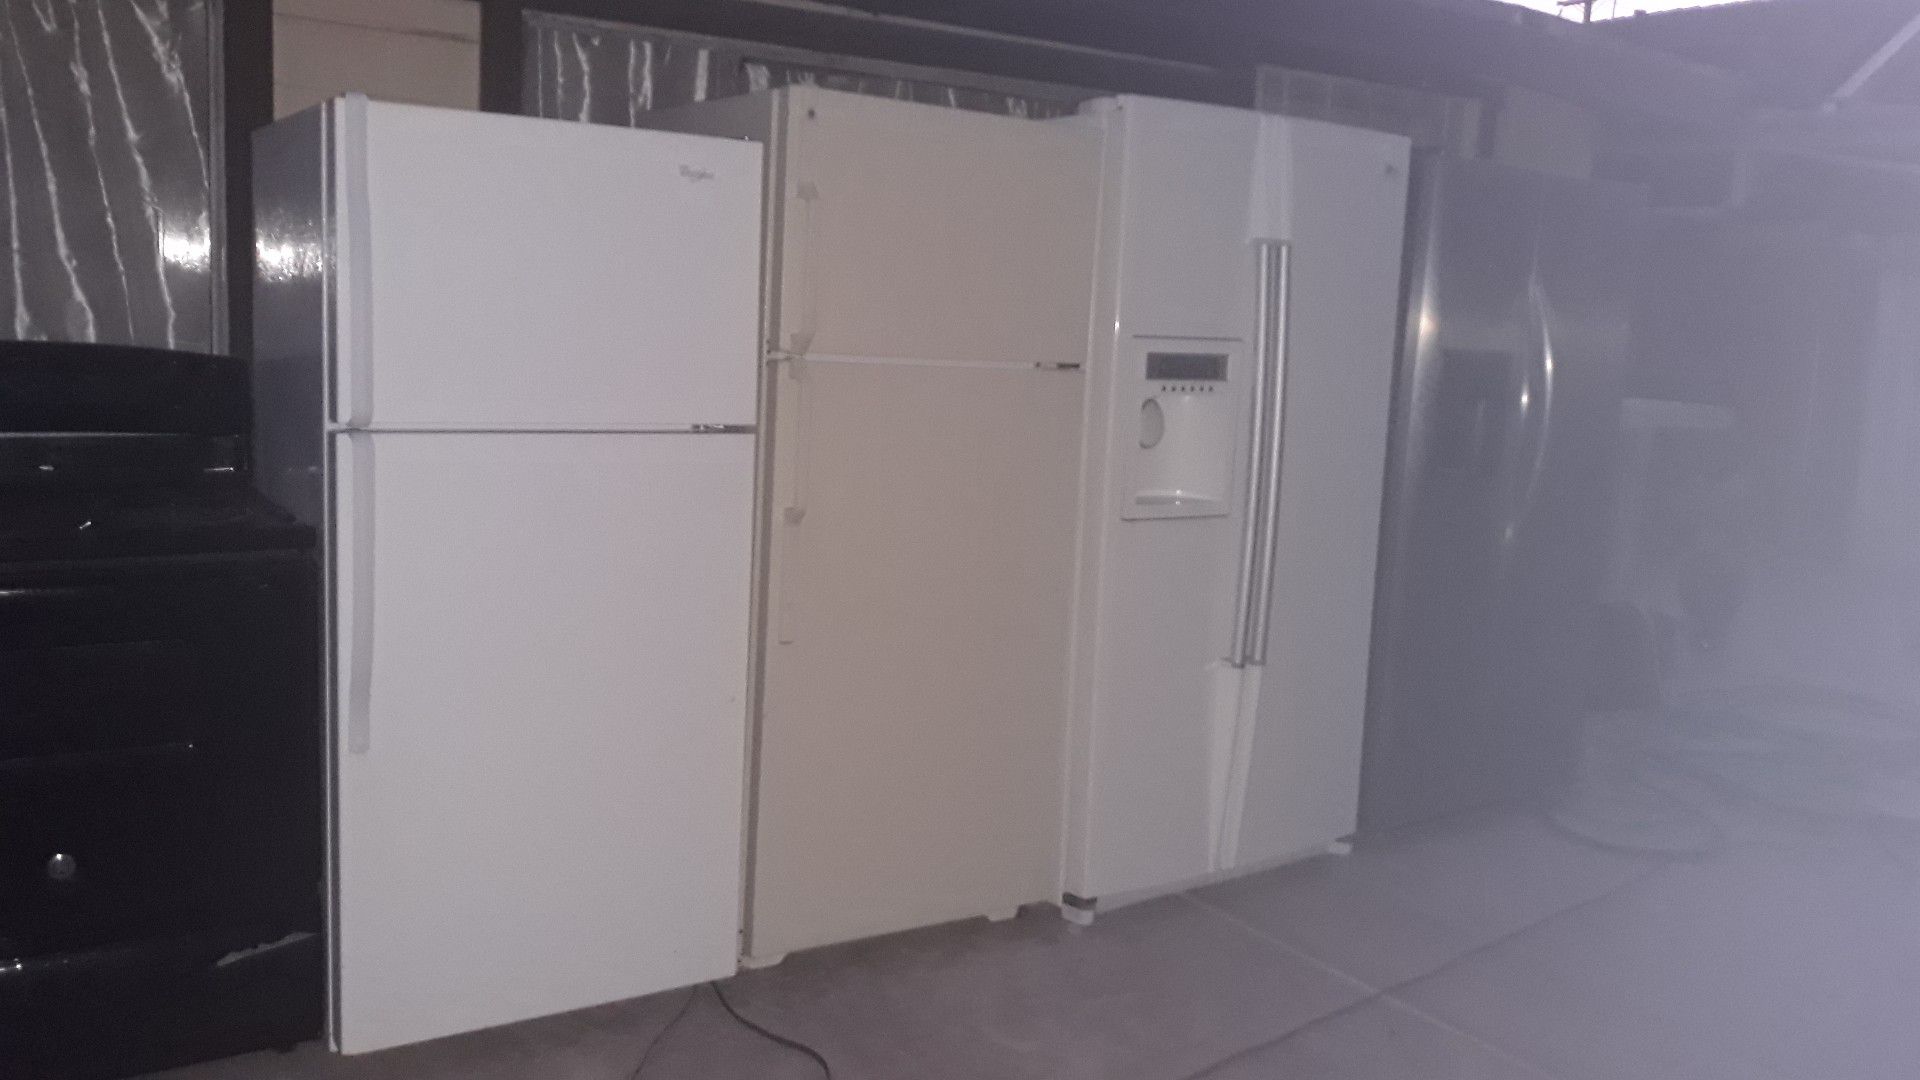 Fridges fridge refrigerator appliances stoves